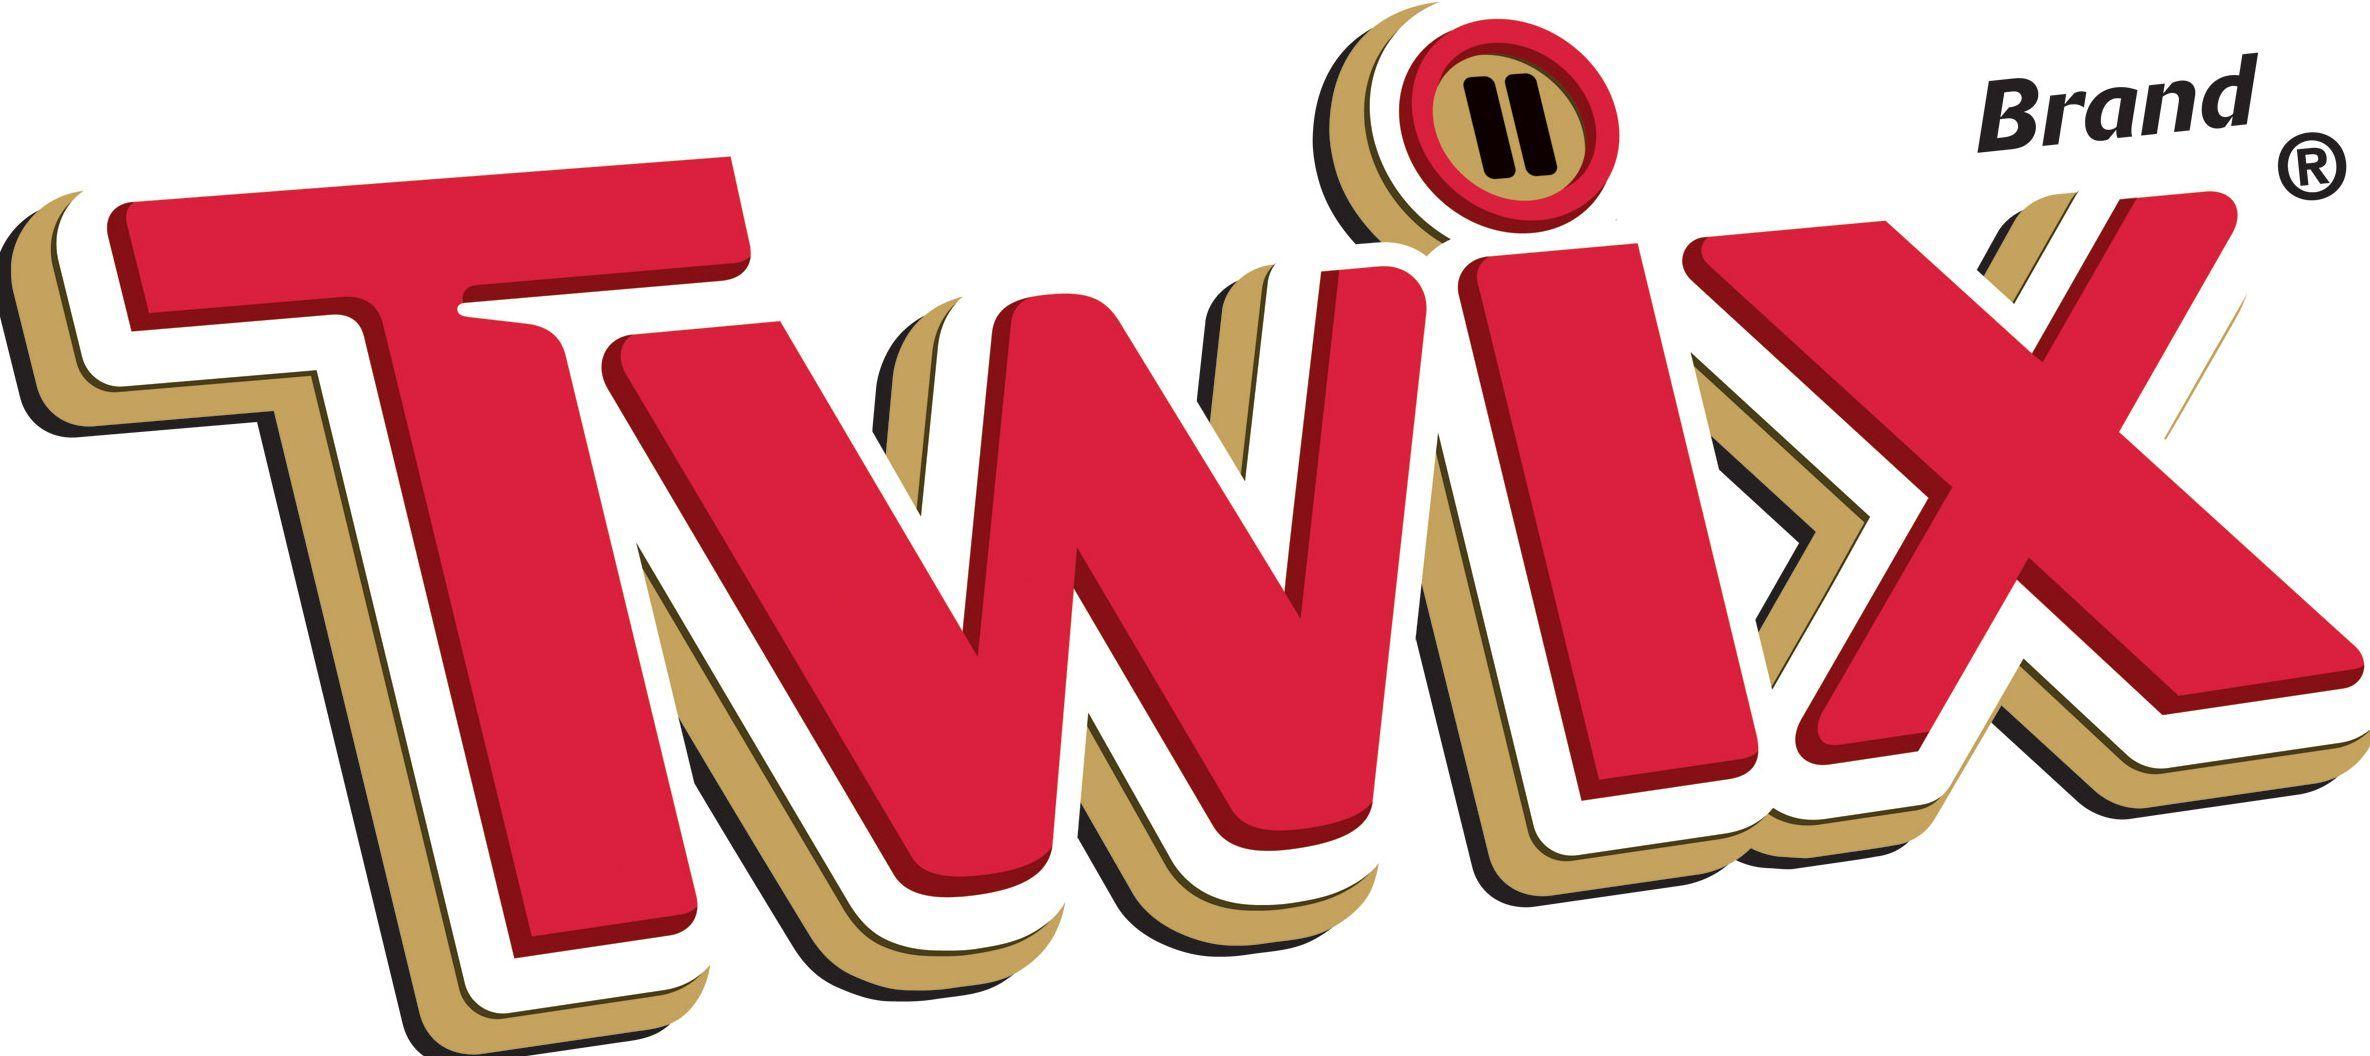 Twix Logo - Twix Logos